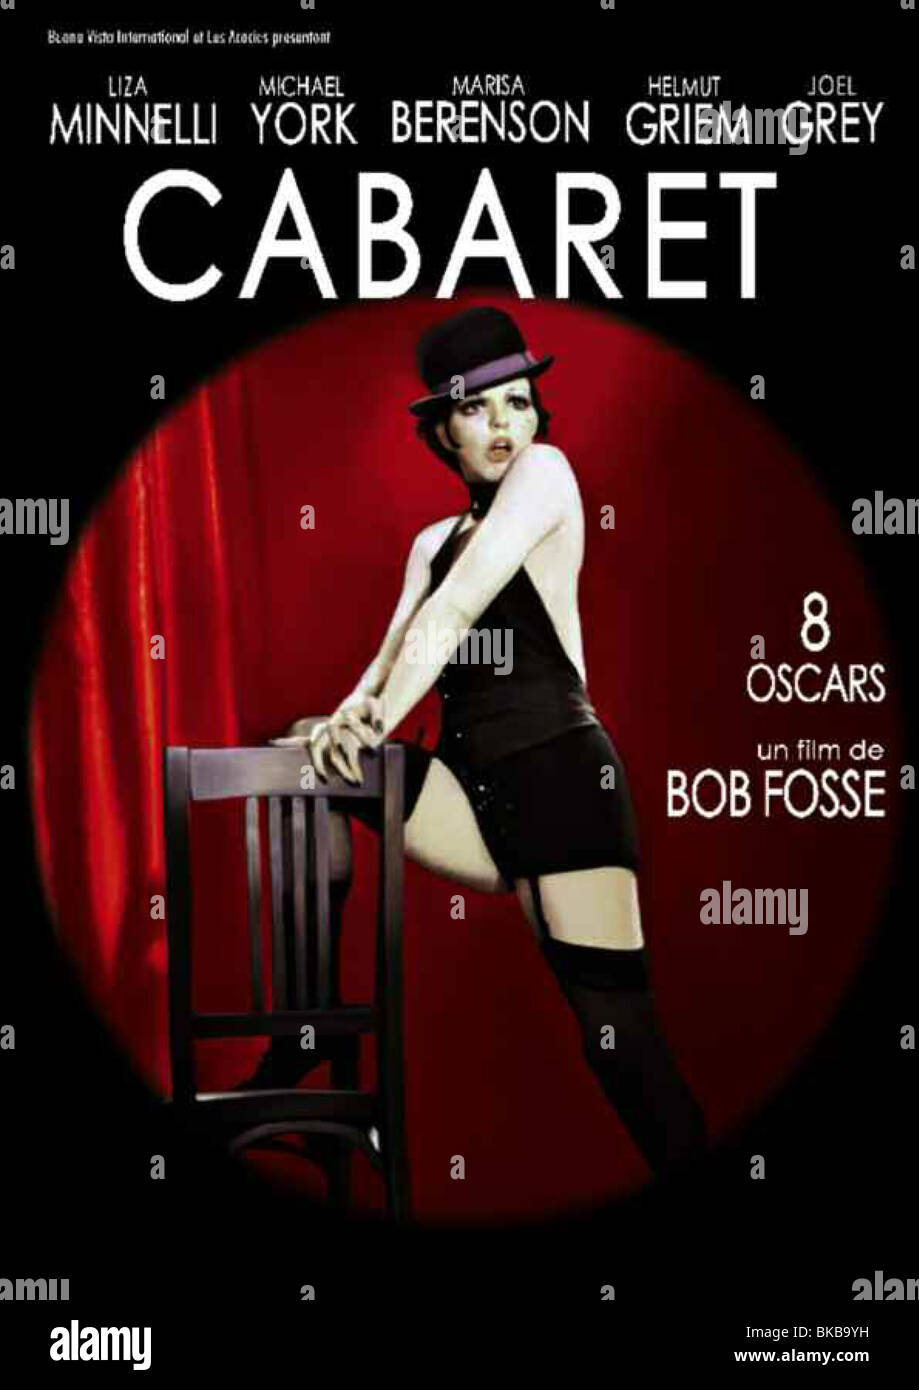 Cabaret Year : 1972 - USA Director : Bob Fosse Liza Minnelli Movie poster  (FR Stock Photo - Alamy